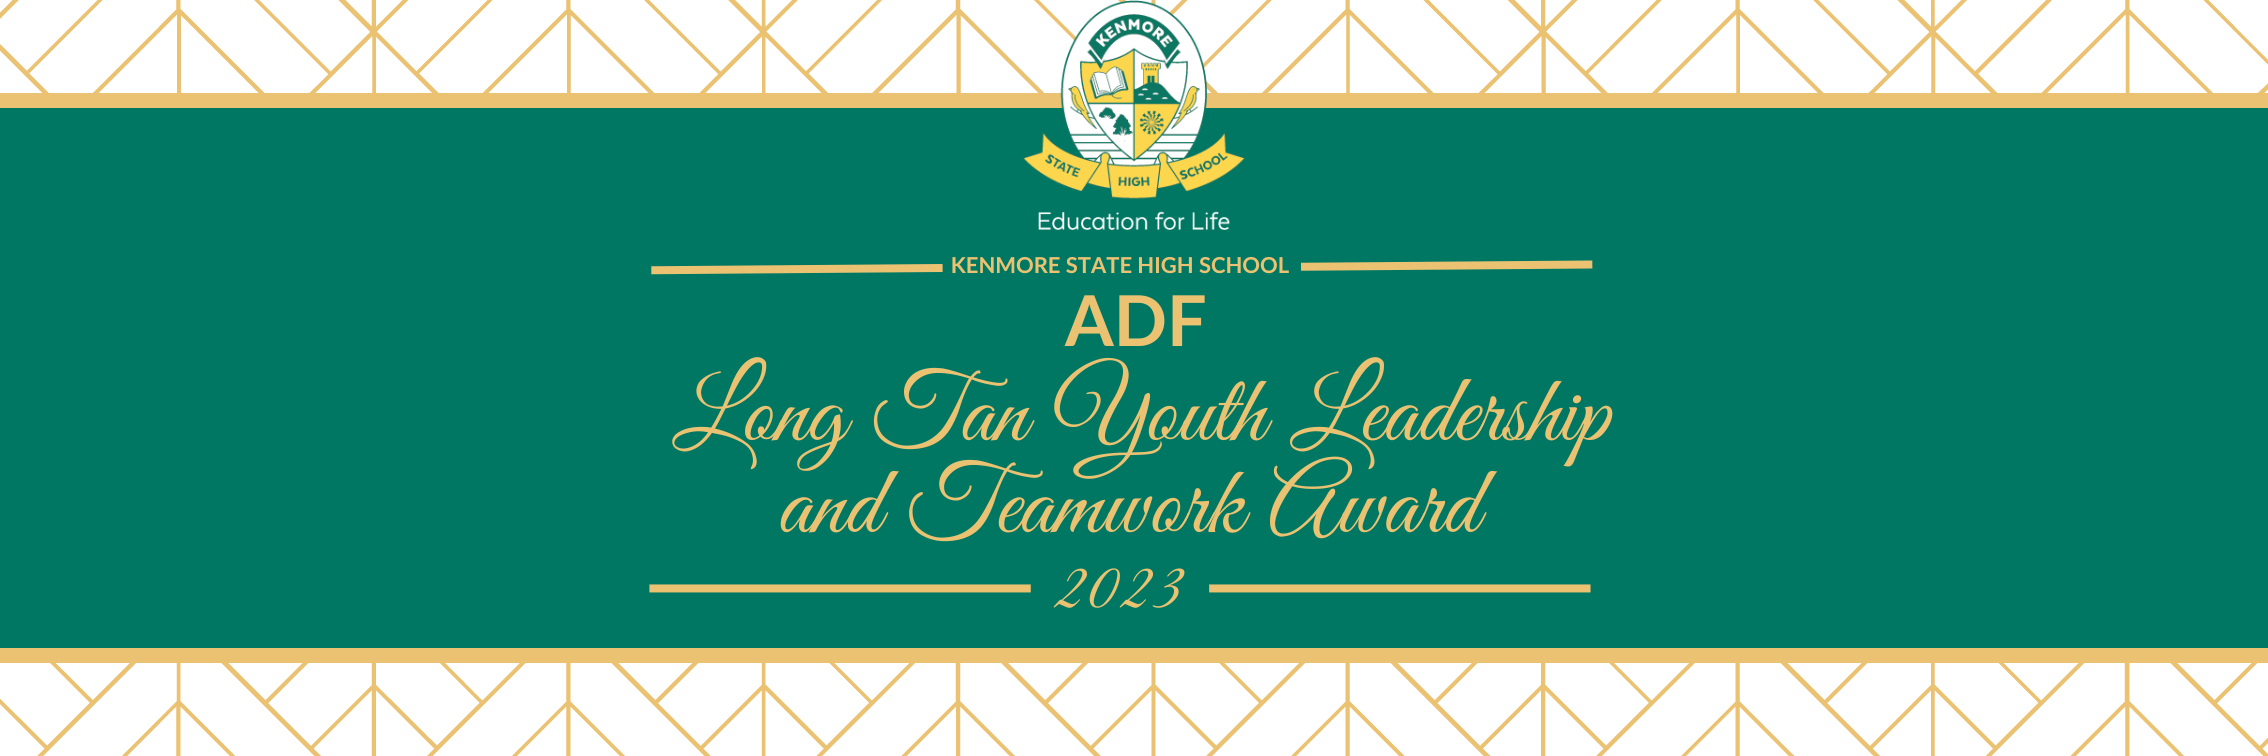 ADF Long Tan Website Banner.png